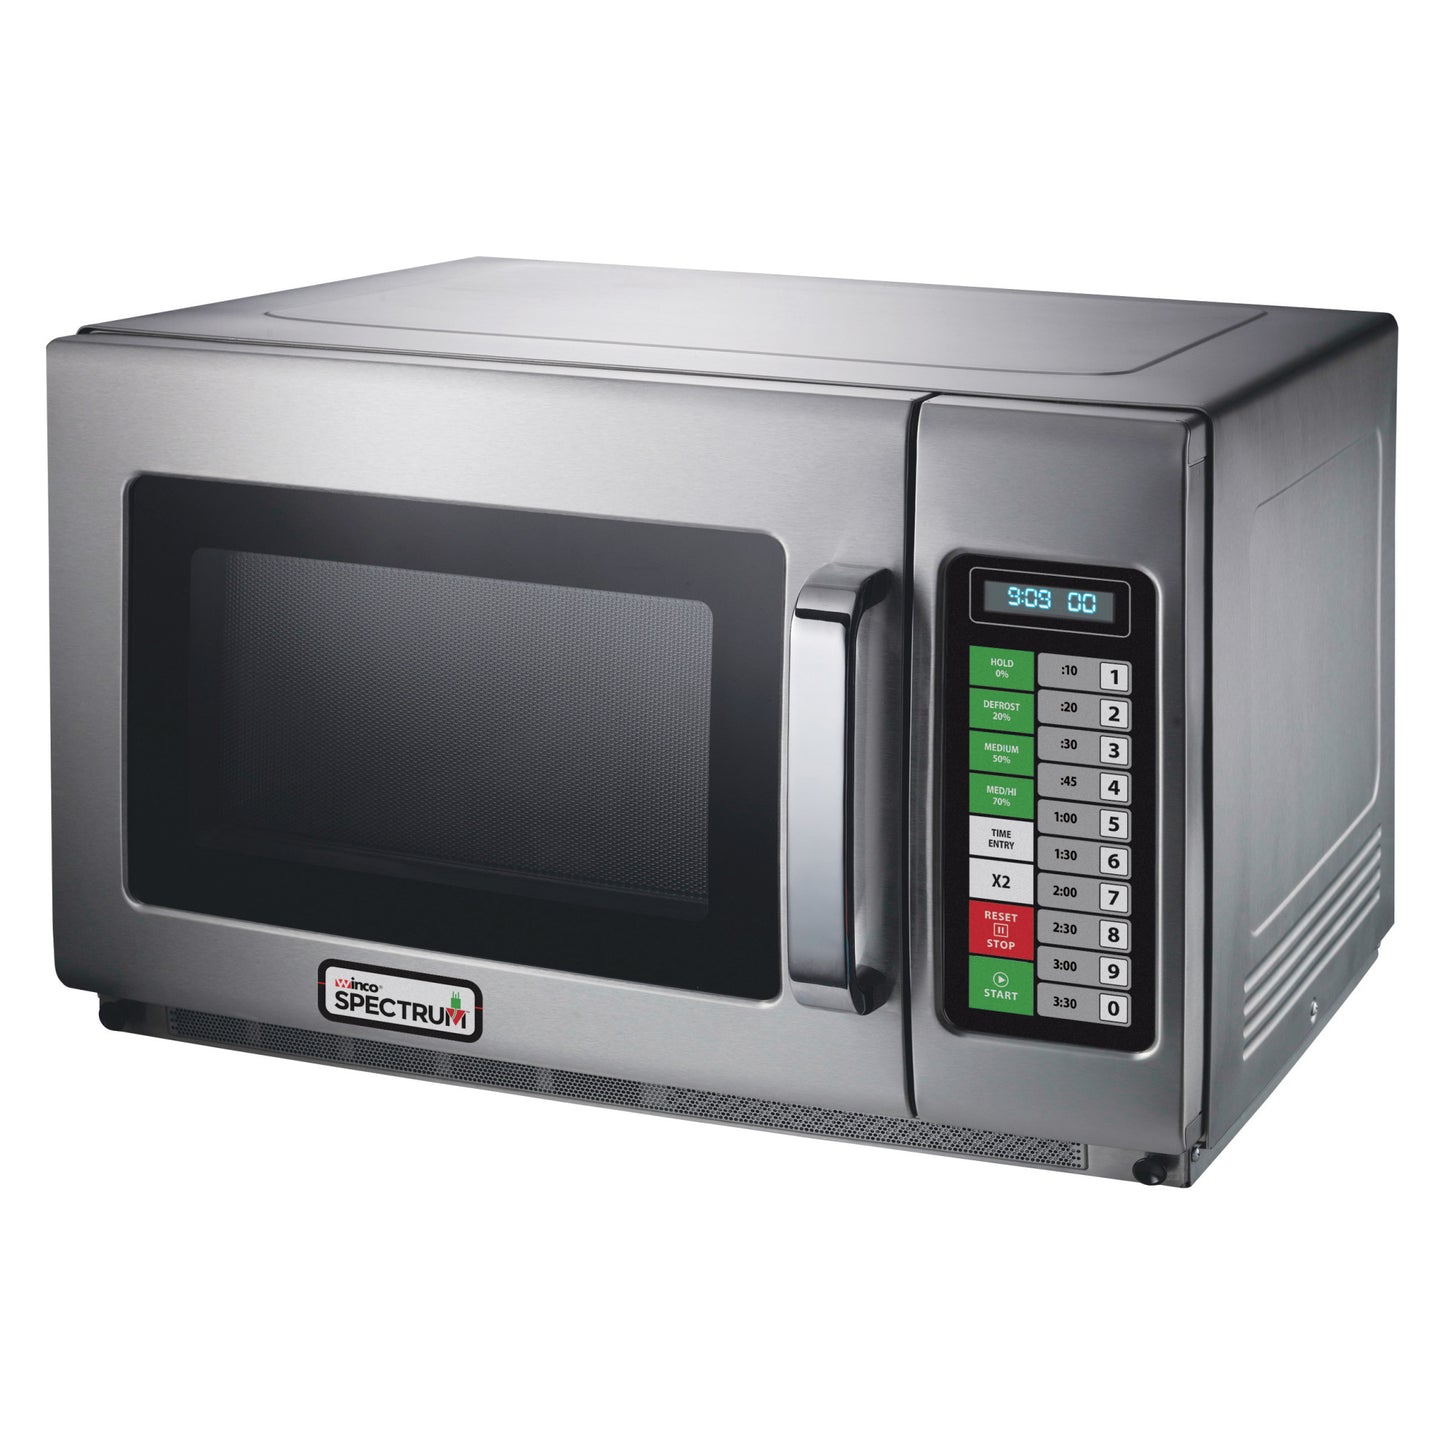 EMW-2100BT - Spectrum Touch Control Microwave - 2100 Watts